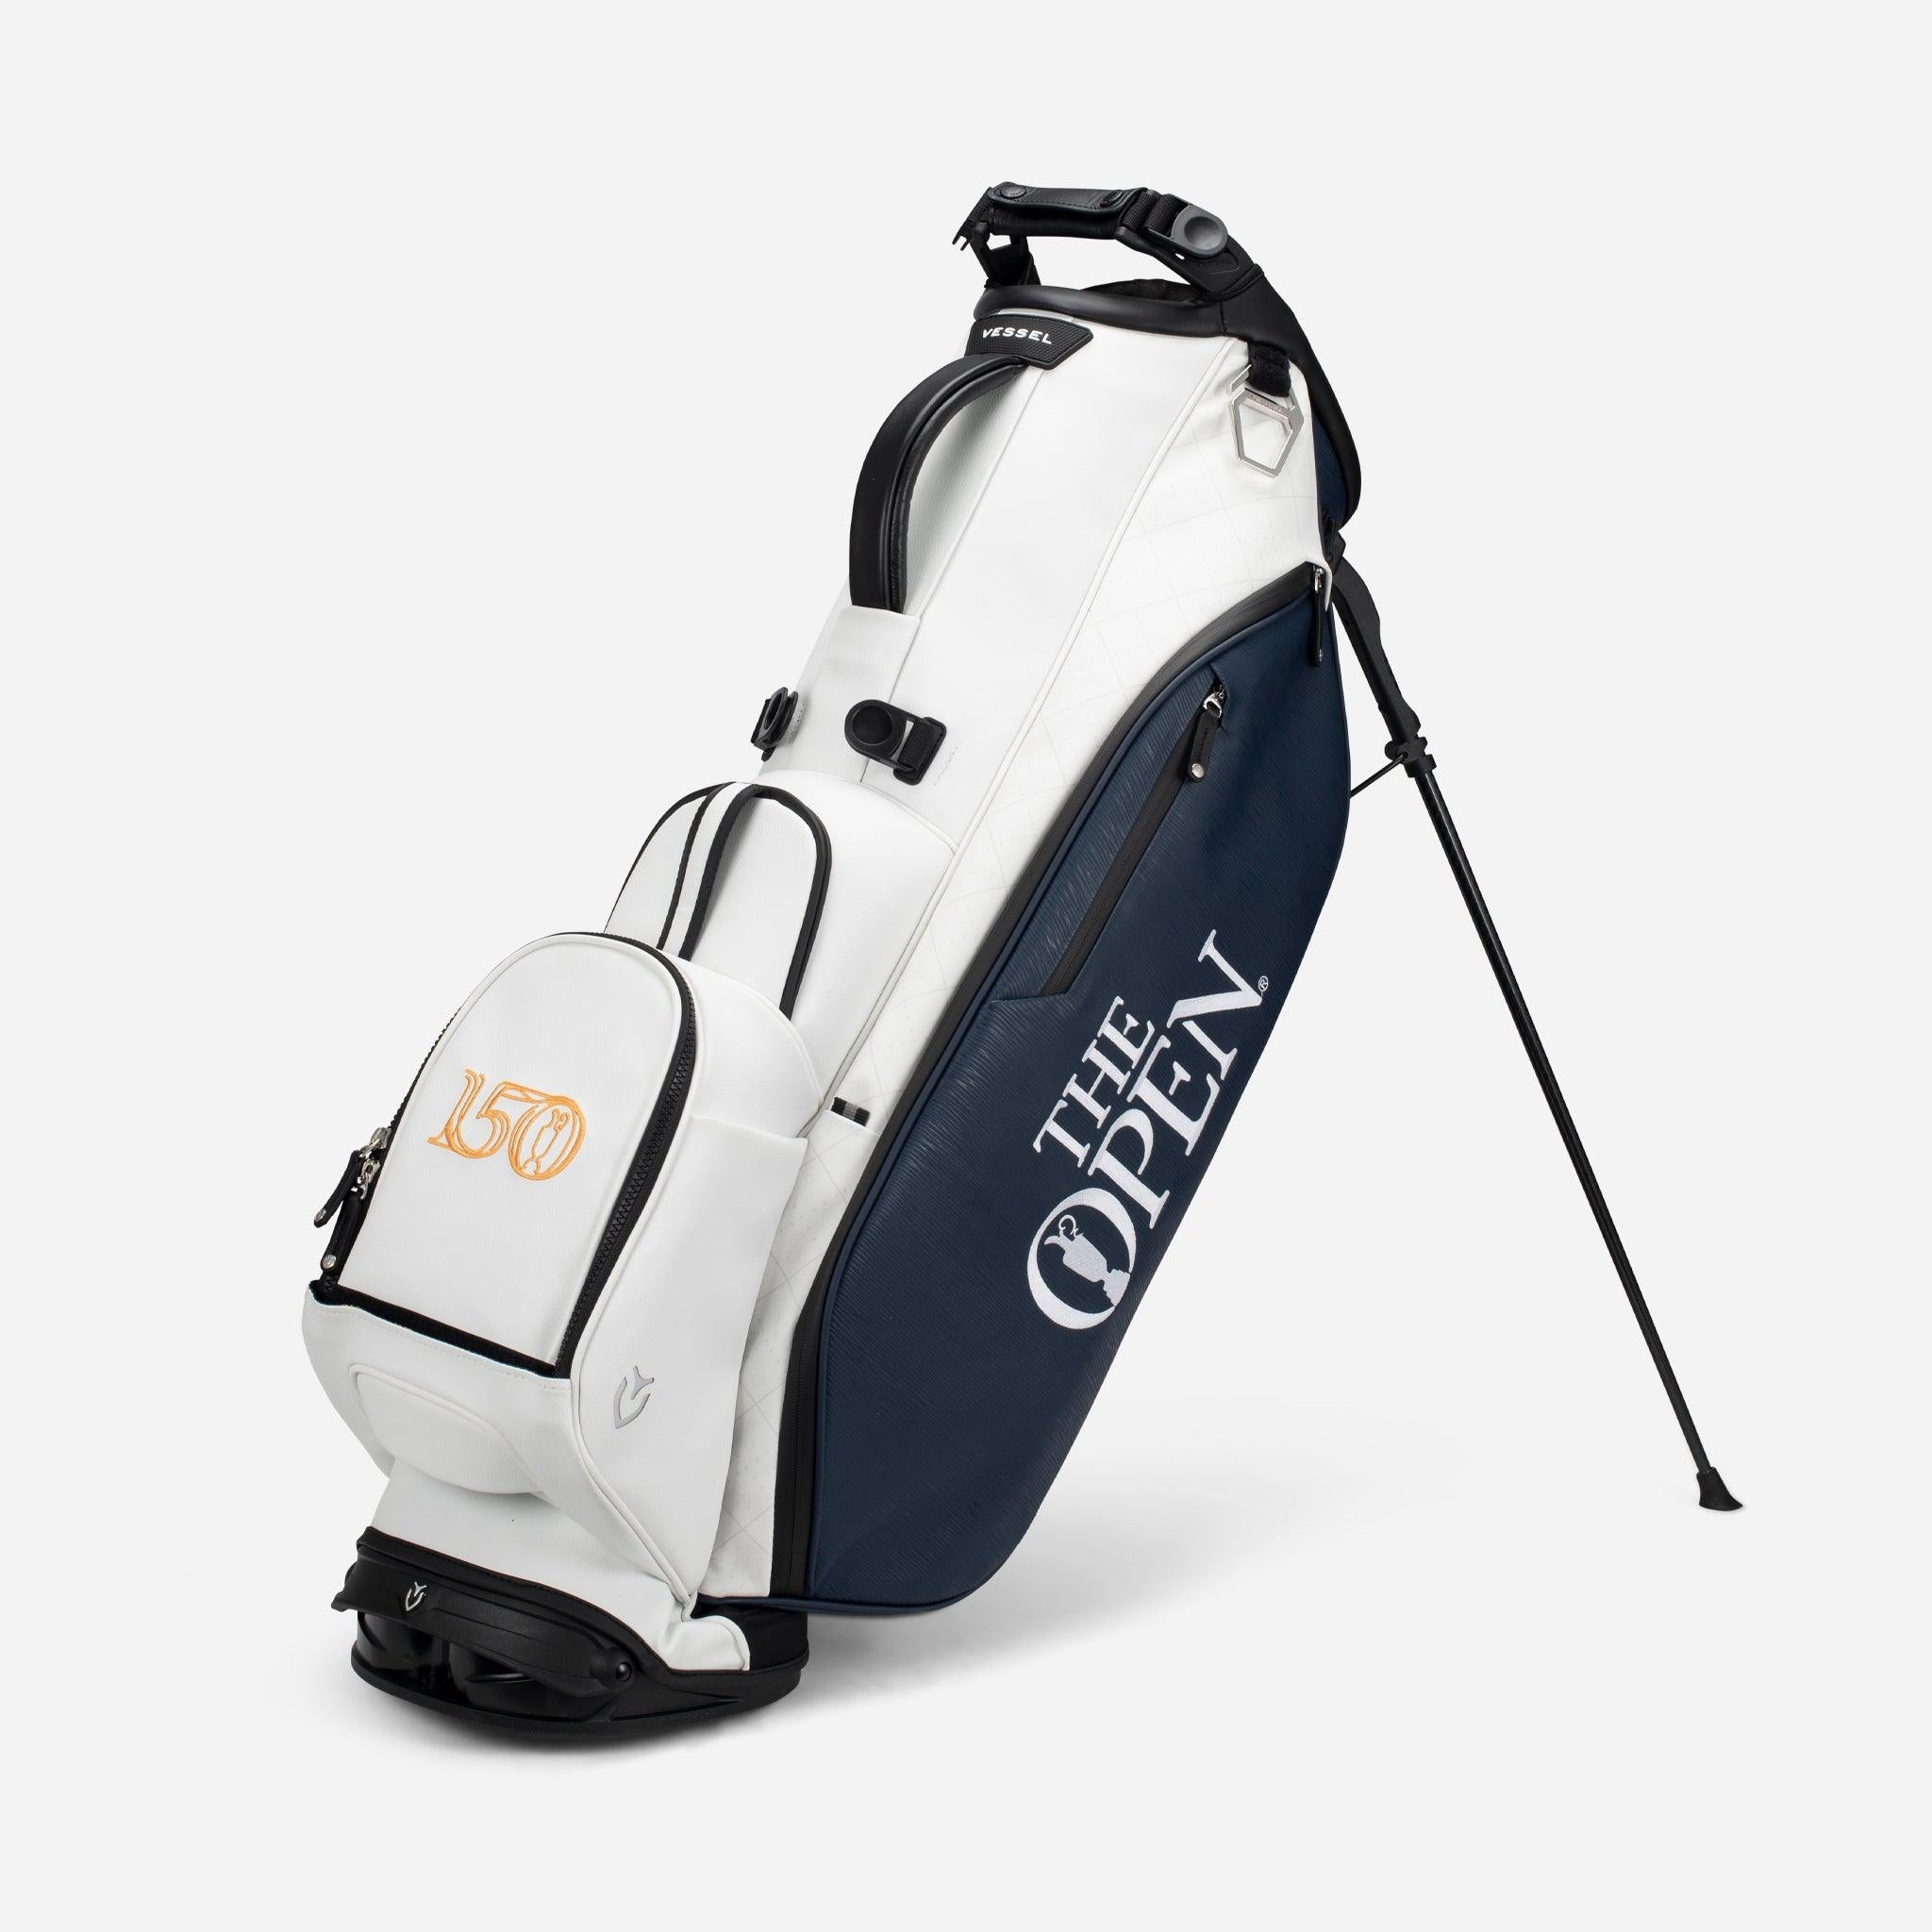 Vessel Golf Bag Rare Citrine Colorway Player 3 stand bag! 6 way top